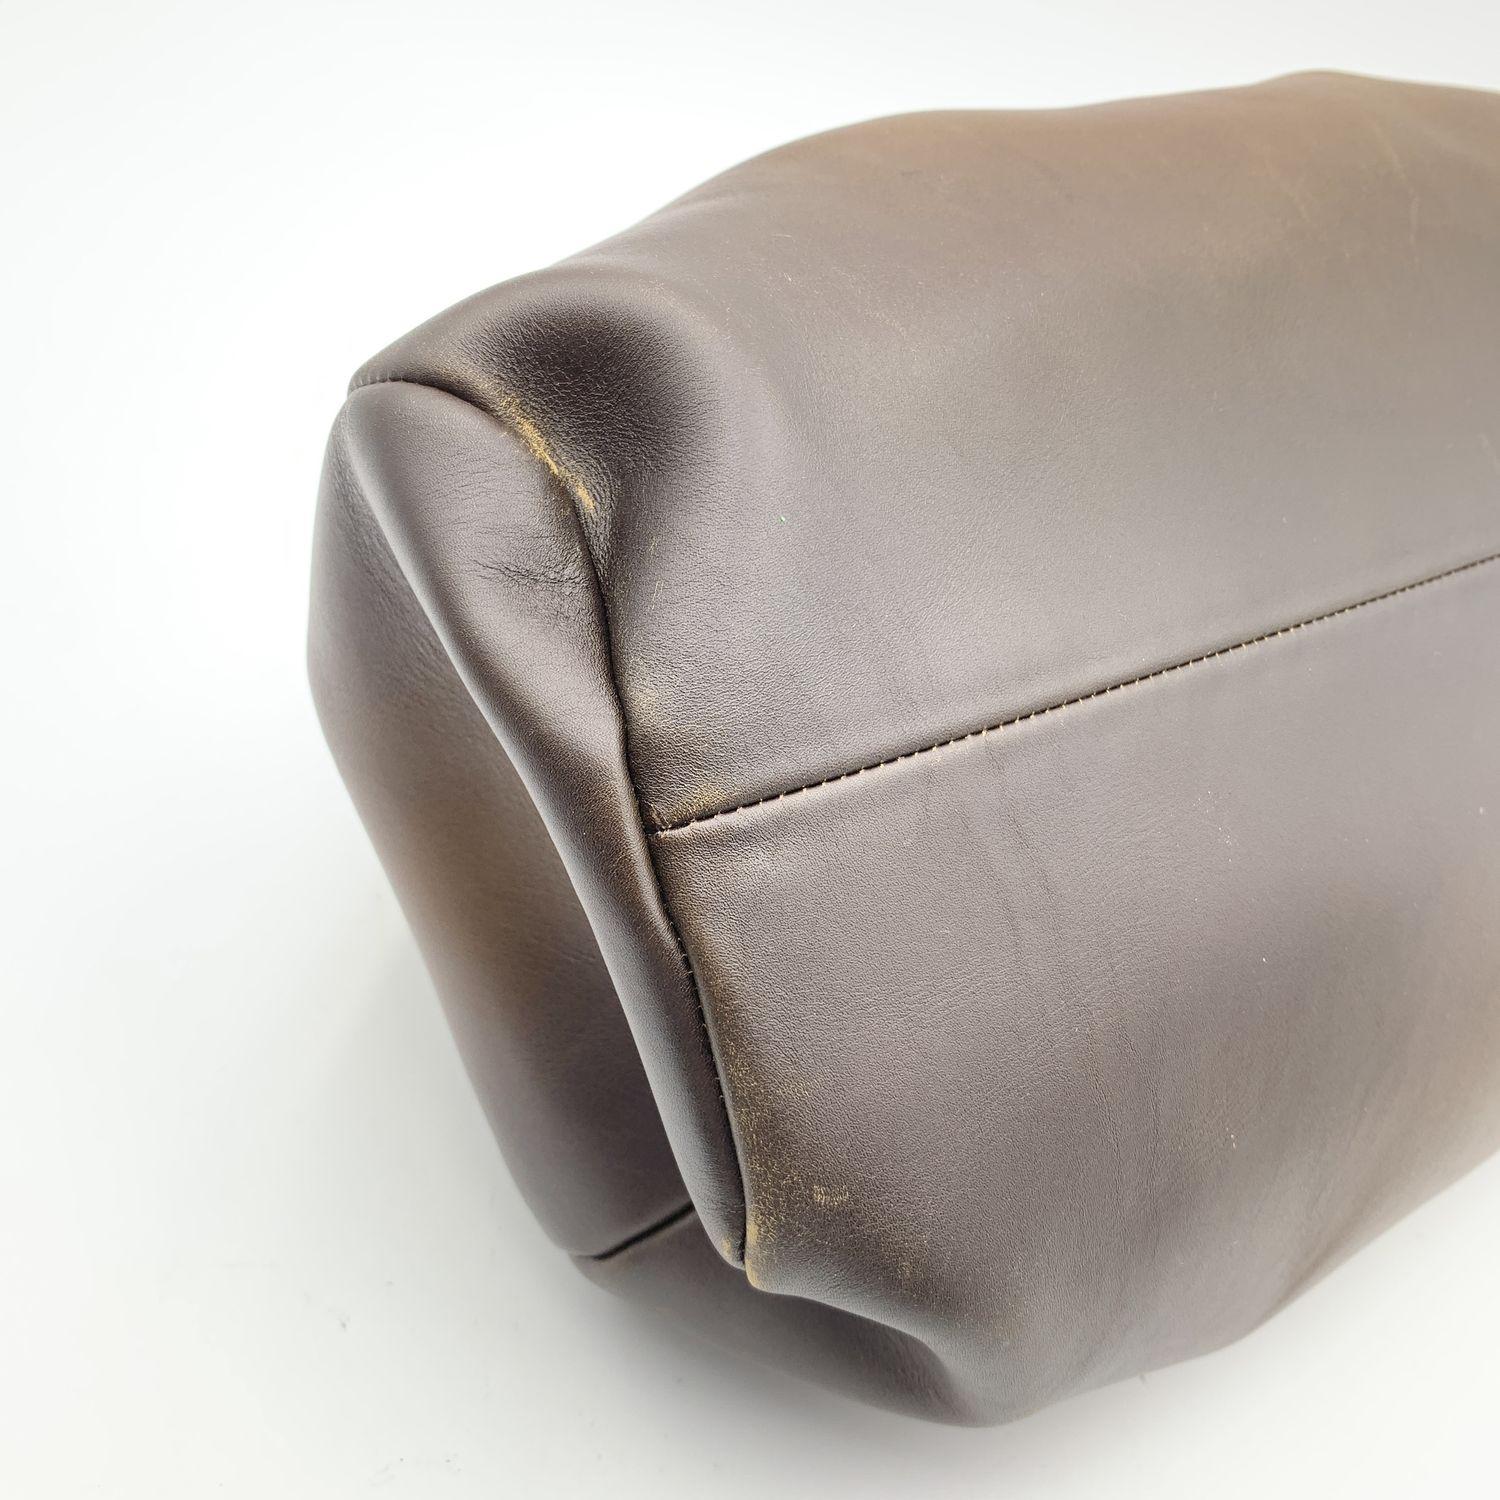 Gucci Brown Leather Wood Handles Bag Handbag Satchel 4